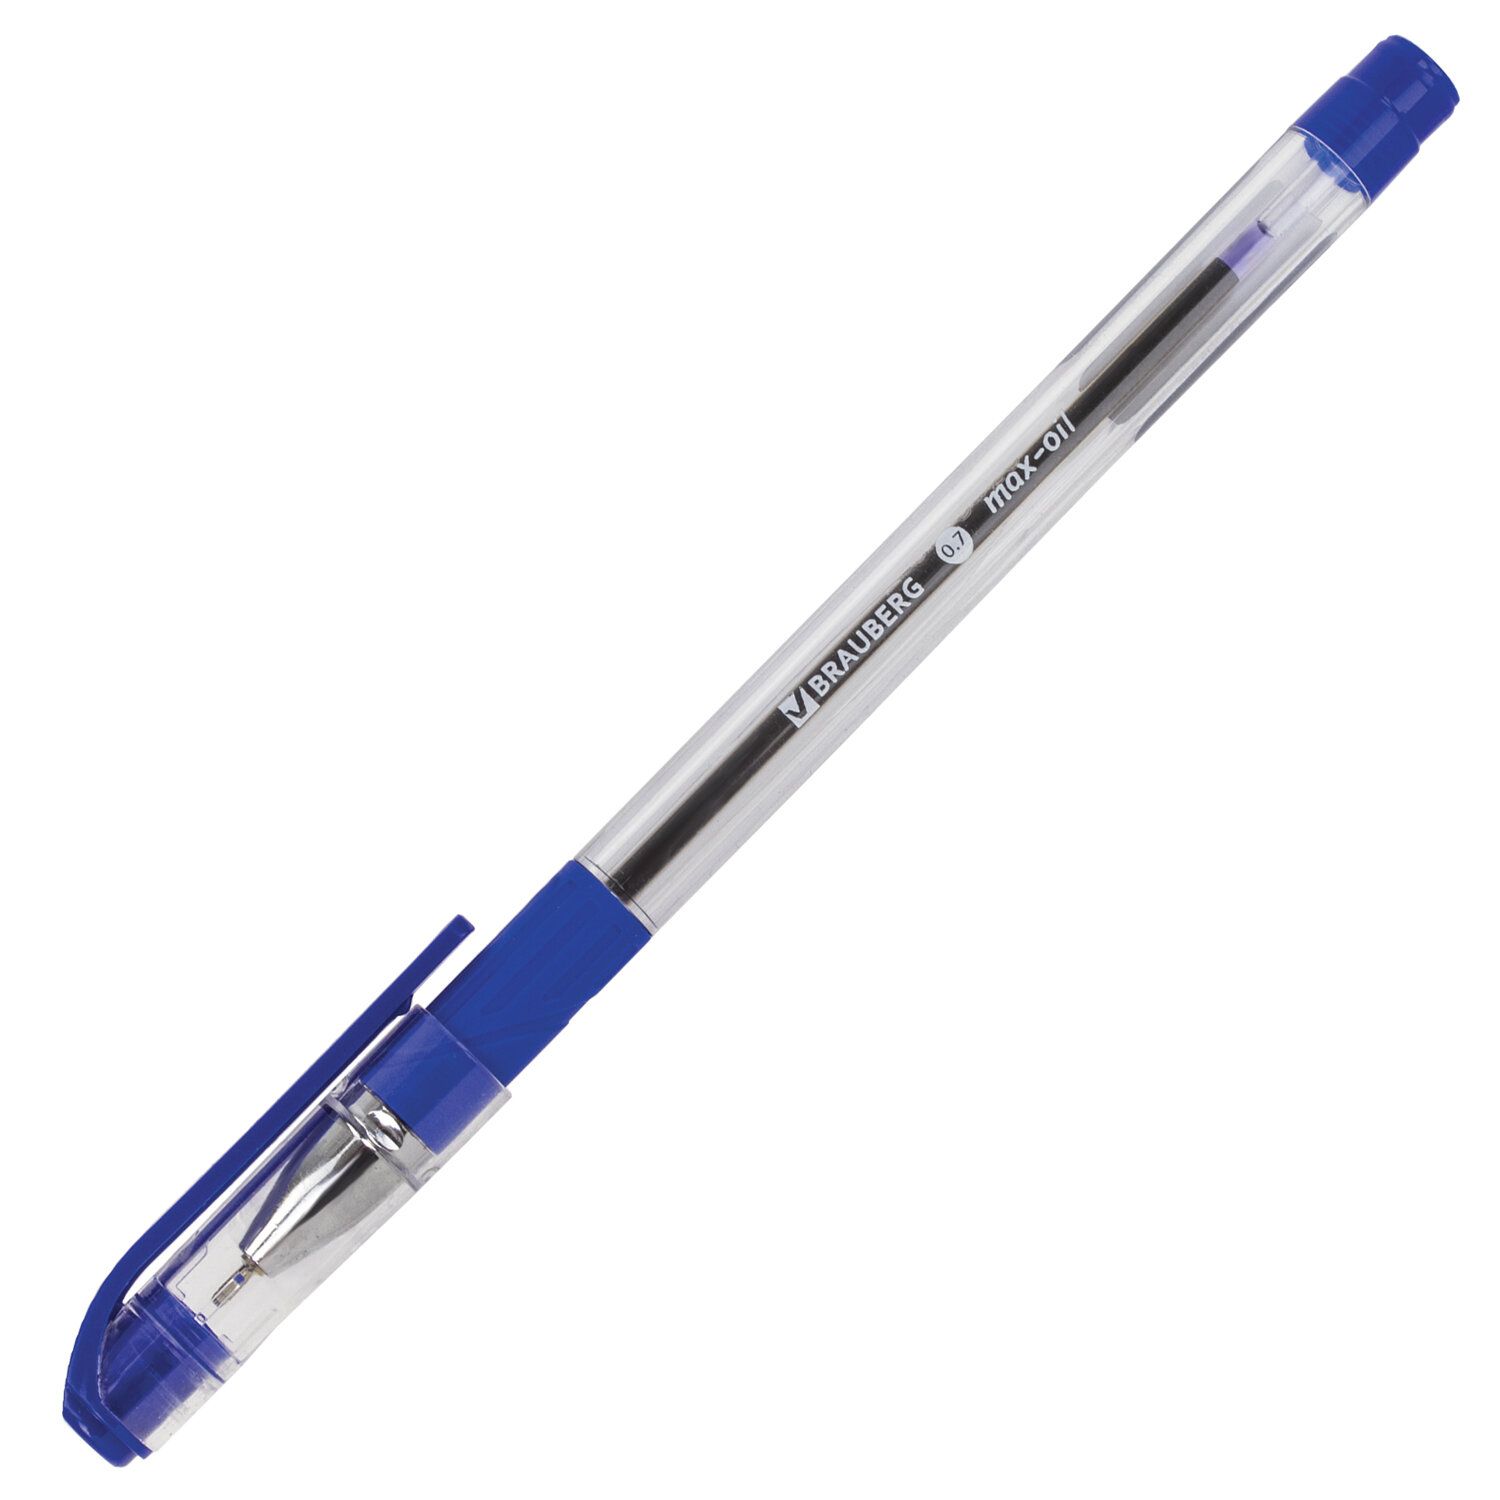 Brauberg 0.7. Ручка БРАУБЕРГ 0.7. Ручка шариковая синяя БРАУБЕРГ. Ручка БРАУБЕРГ 0.7 масляная. Ручка БРАУБЕРГ 0.7 мм синяя.